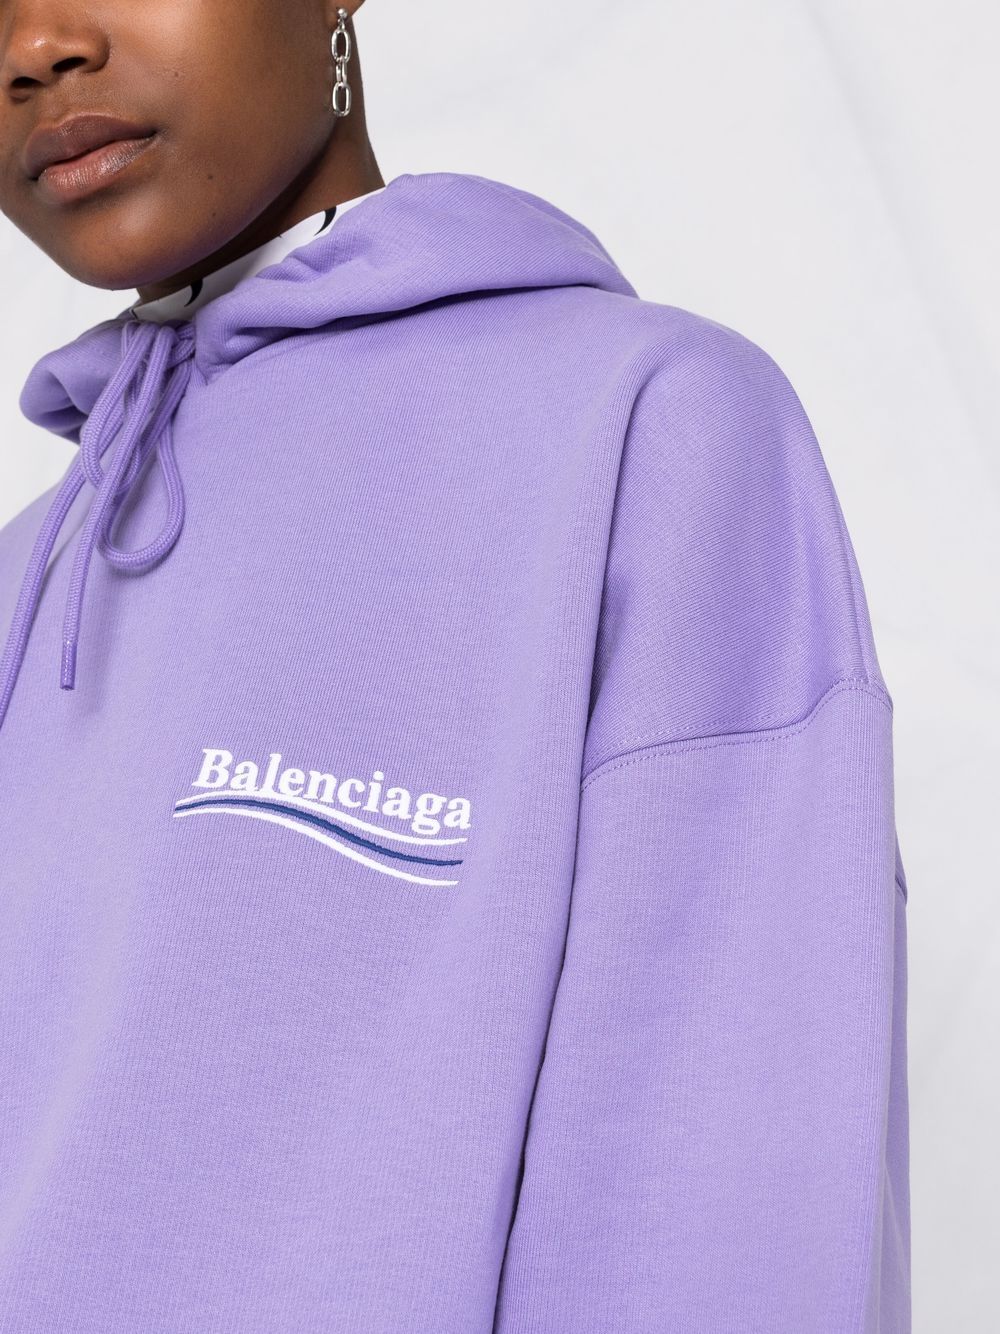 фото Balenciaga худи с вышитым логотипом